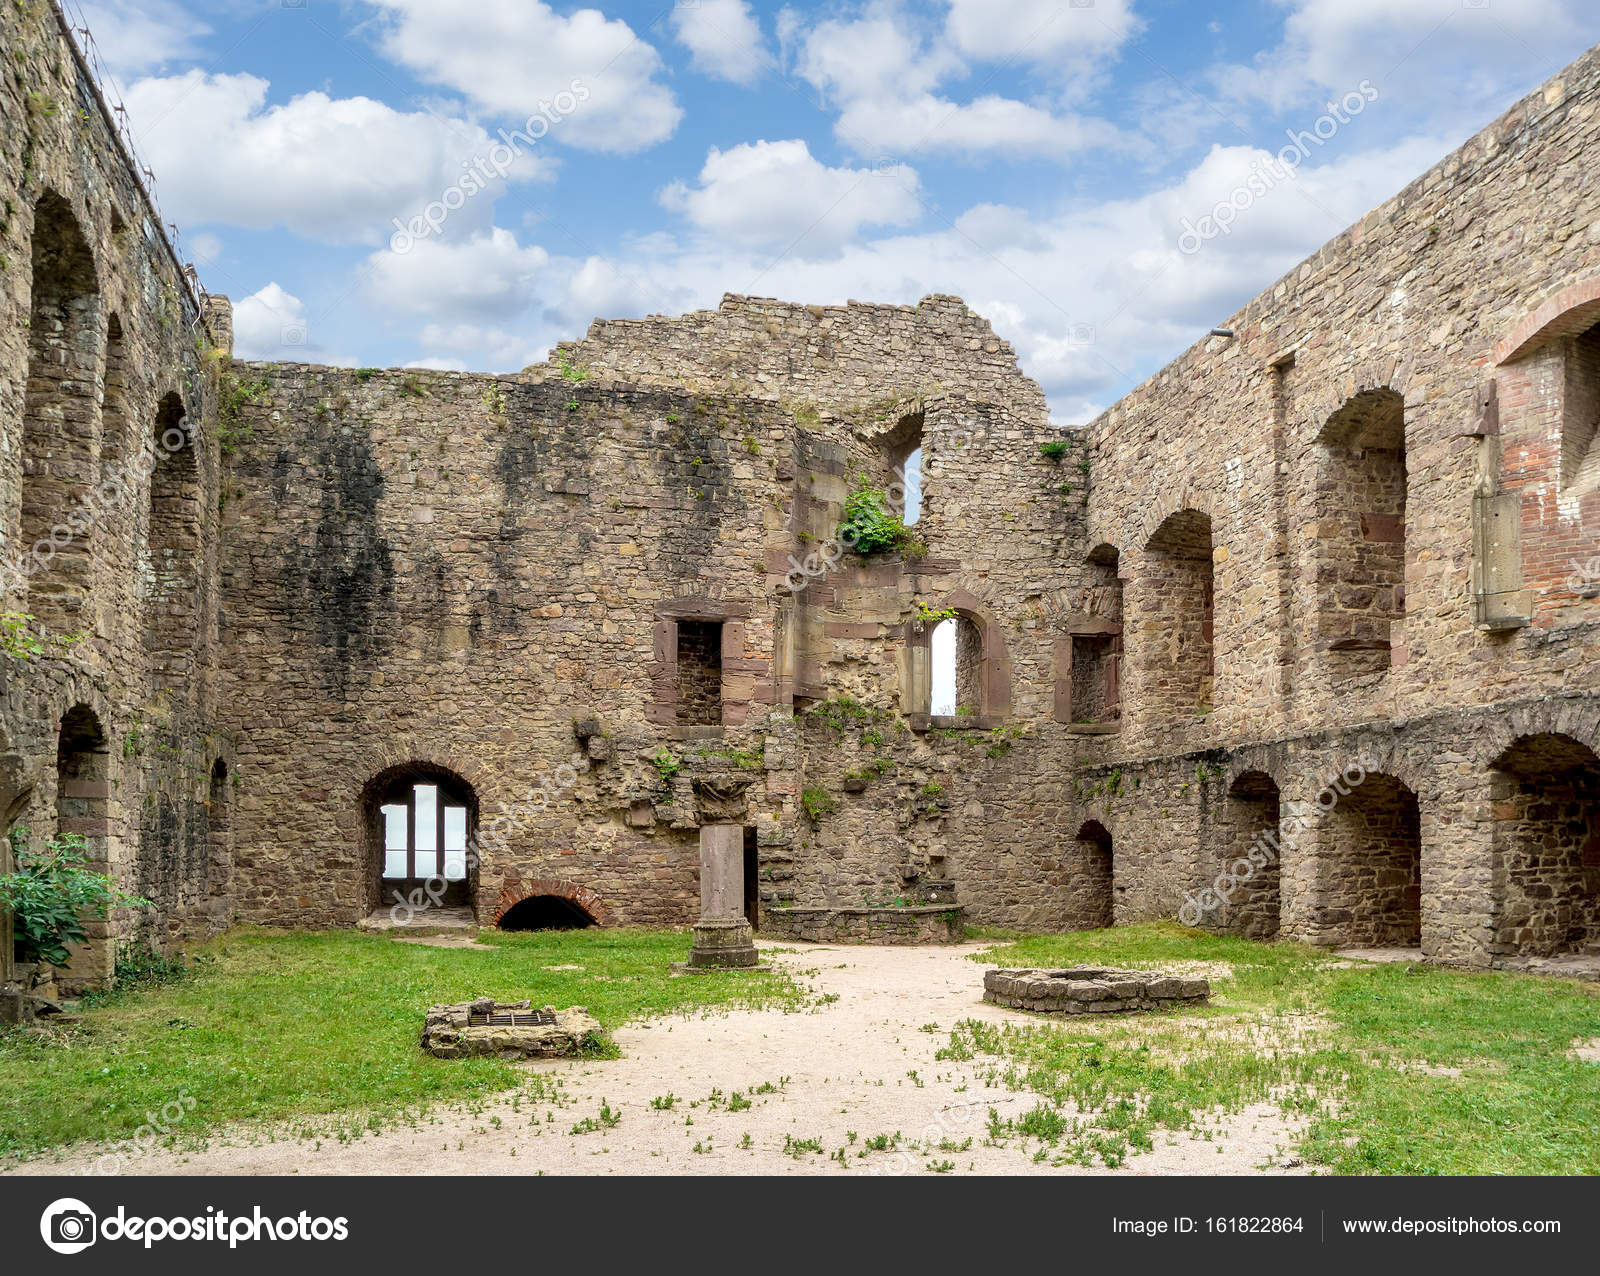 Old Castle ruins, Baden-Baden, Germany — Stock Photo © g215 #161822864